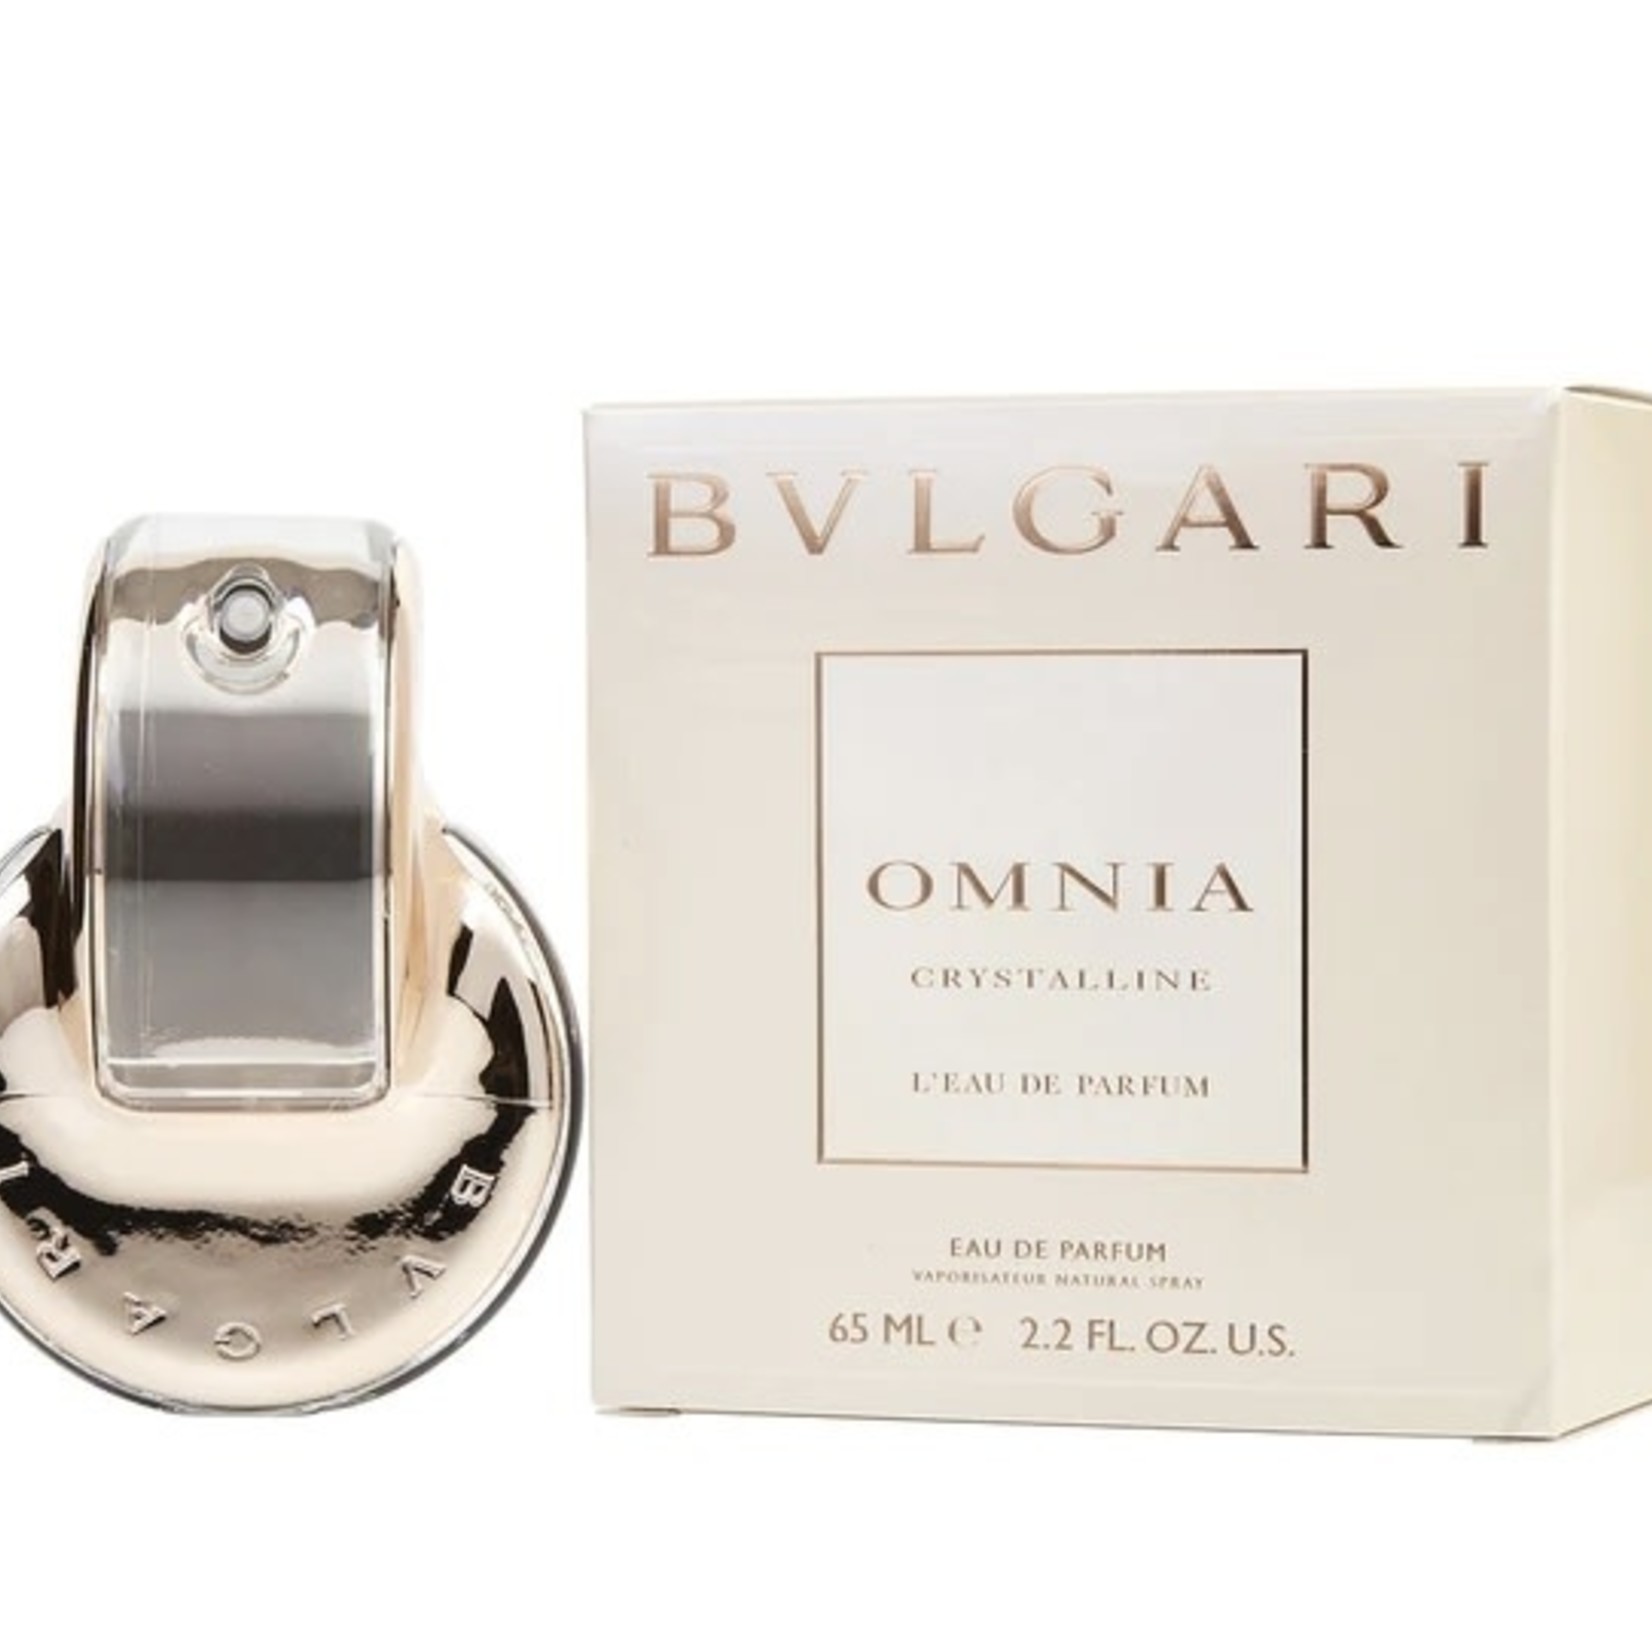 Bvlgari Omnia Crystalline L’eau de Parfum